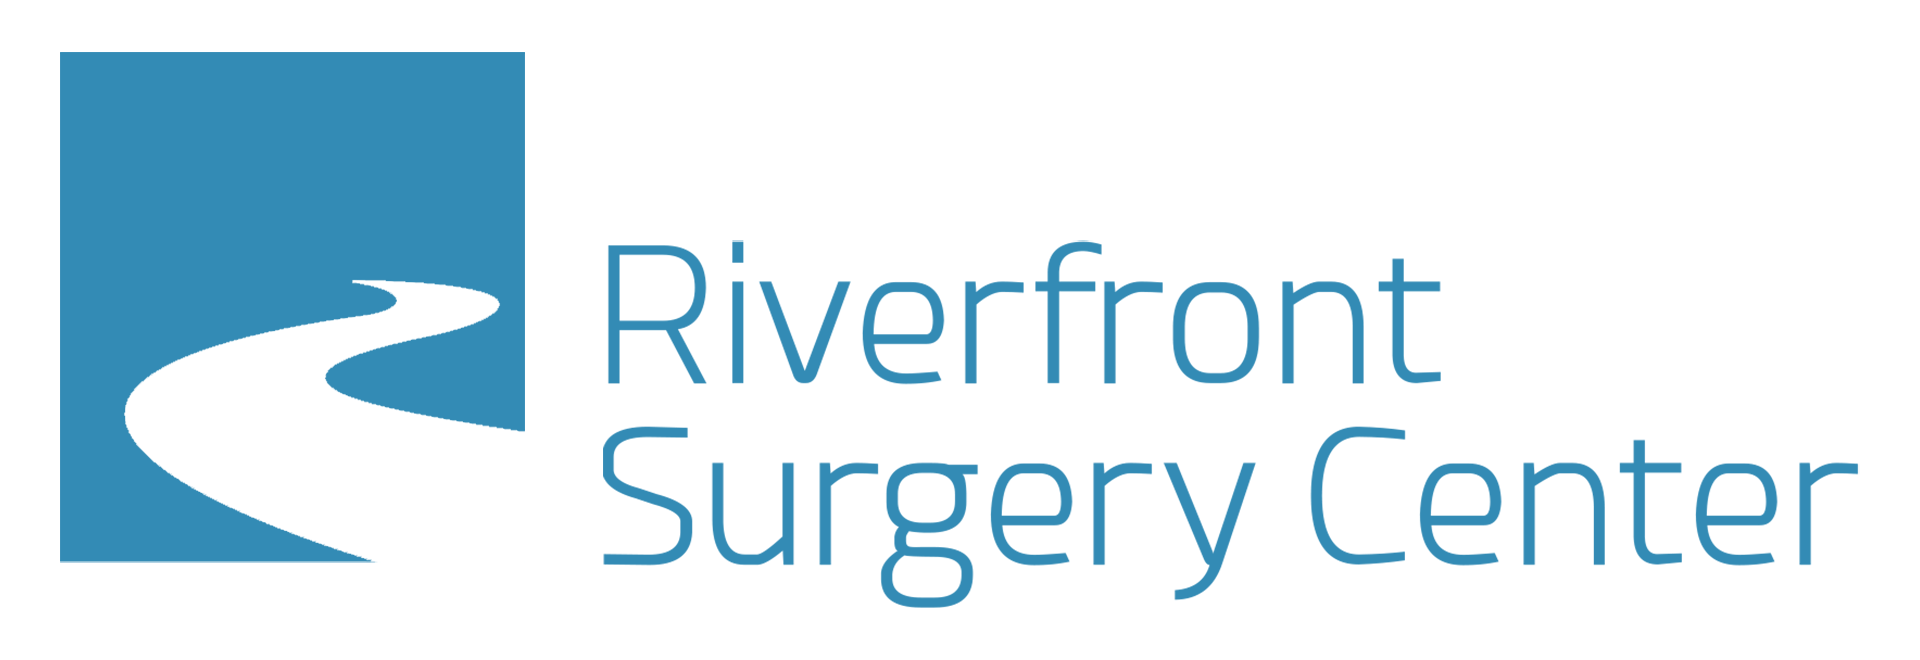 Riverfront-Surgery-Logo-Draft.png